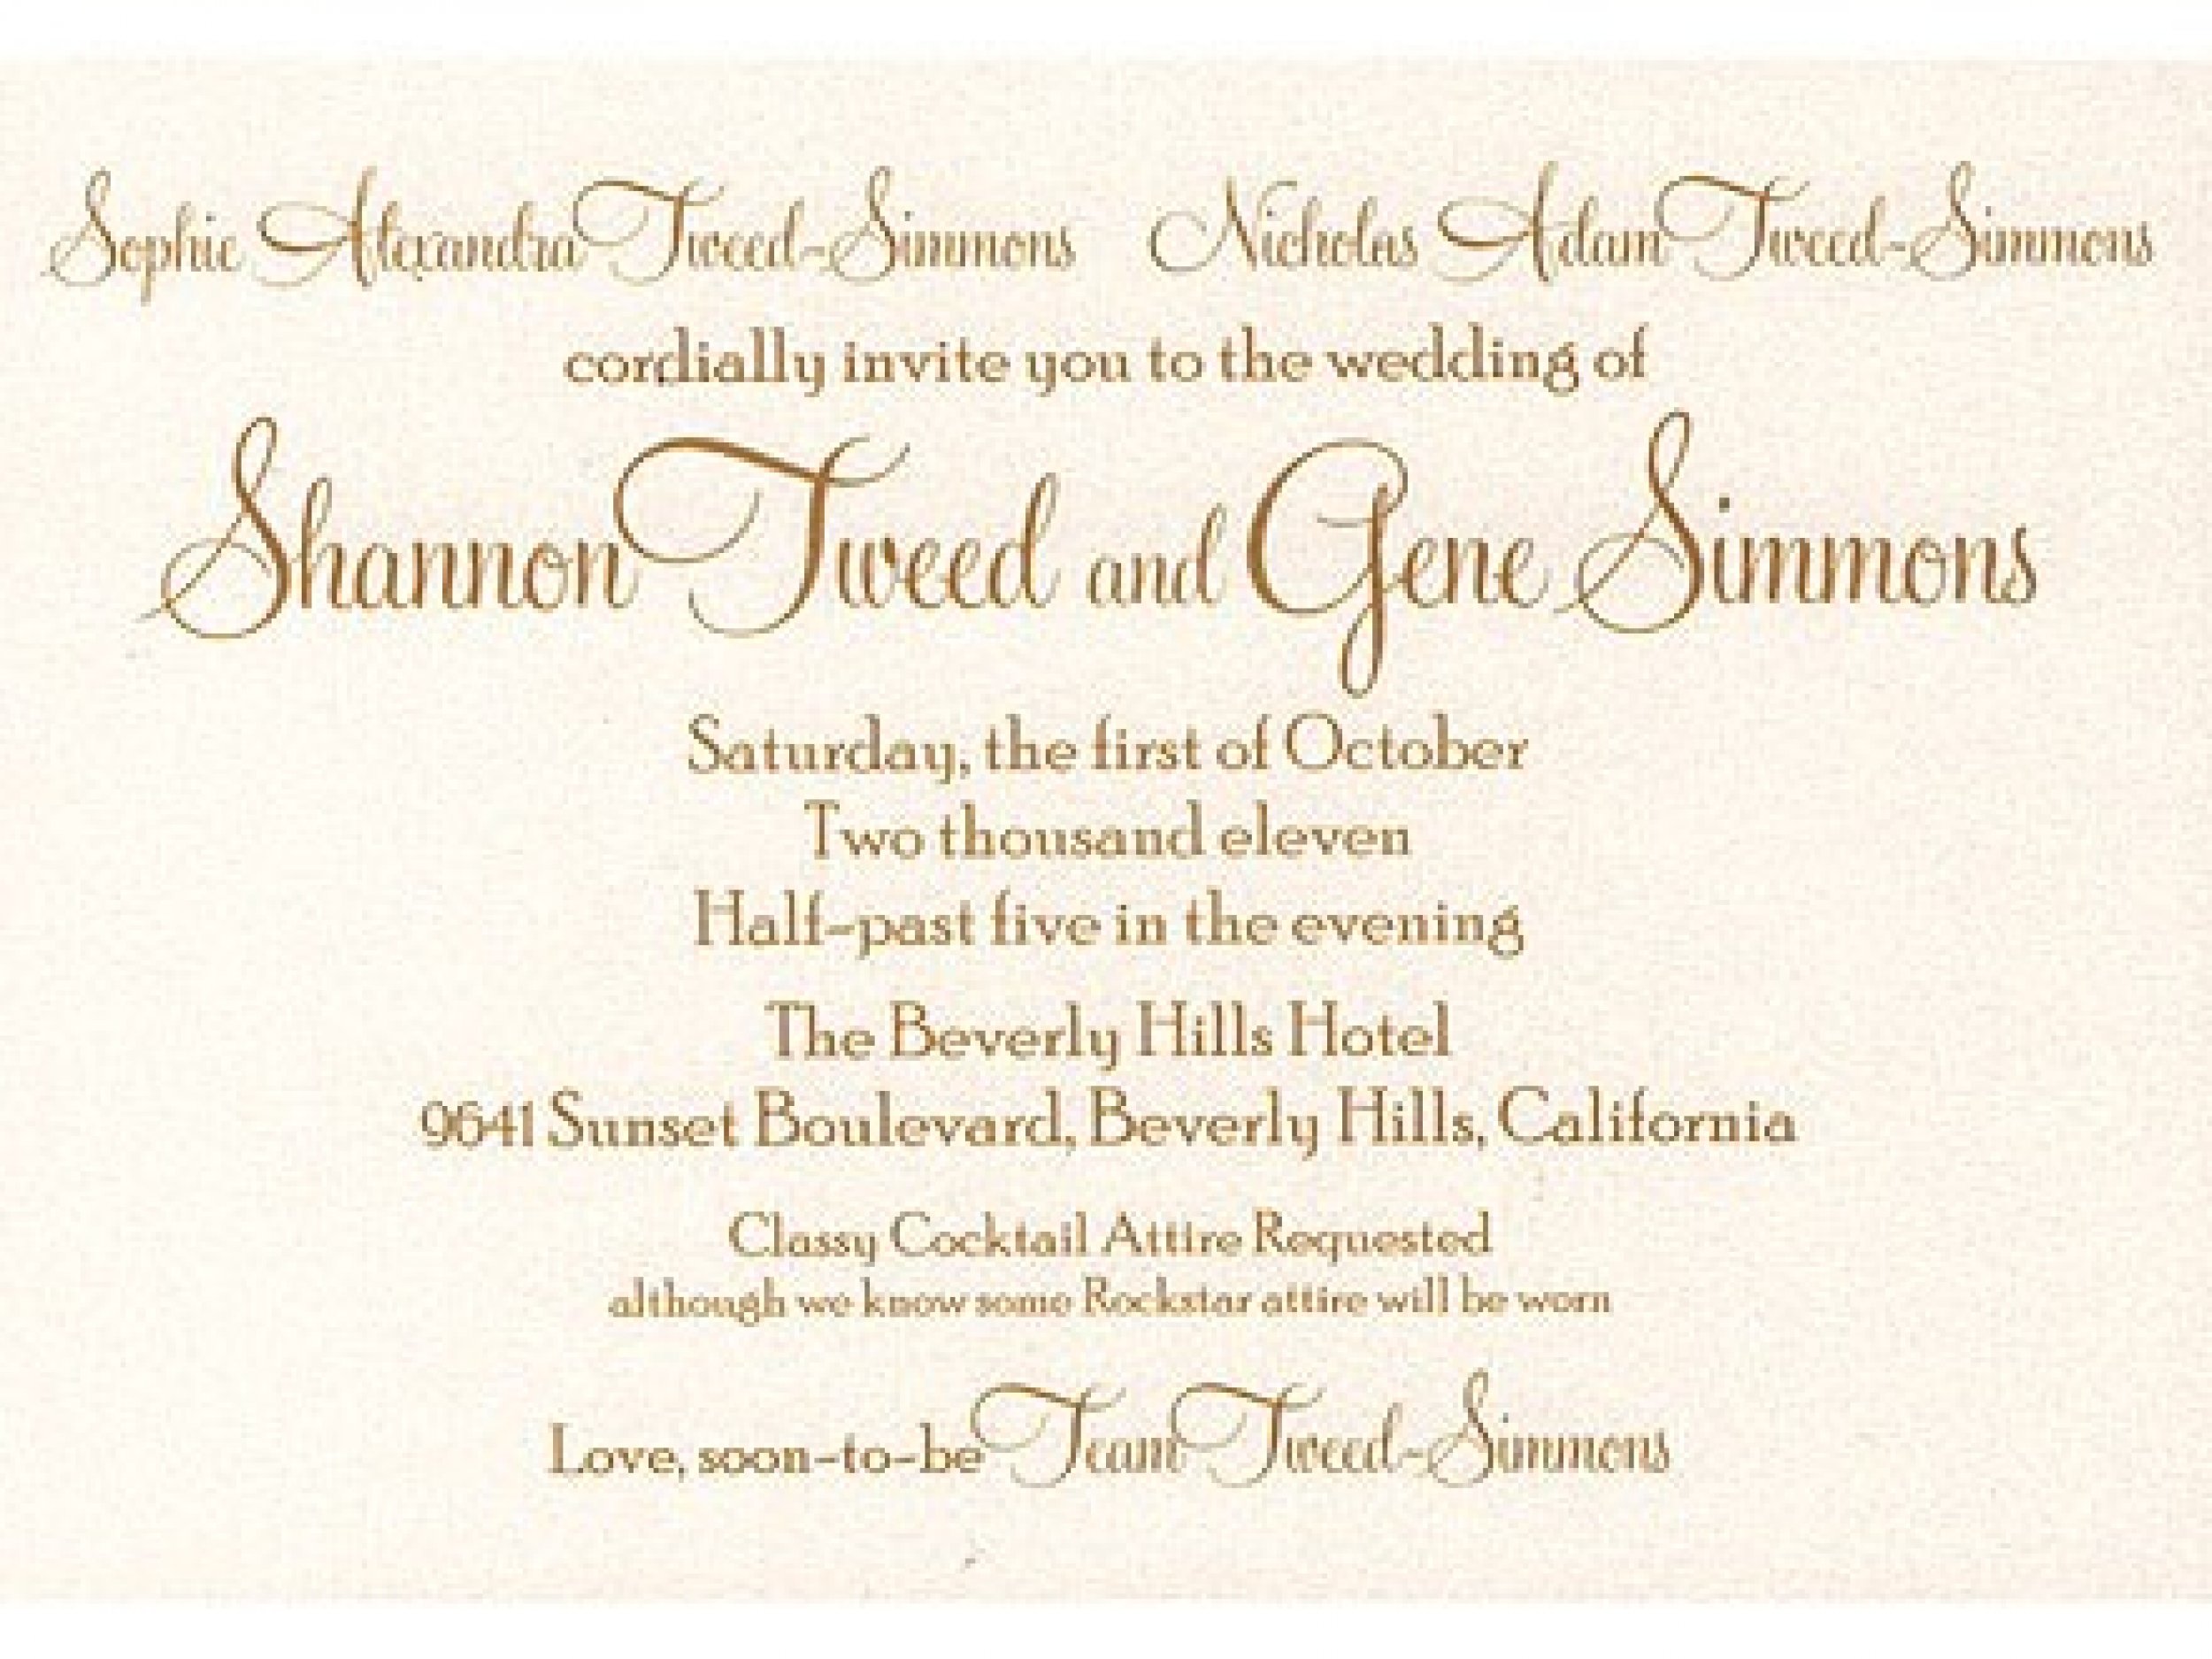 Gene Simmons and Shannon Tweed wedding invatation.